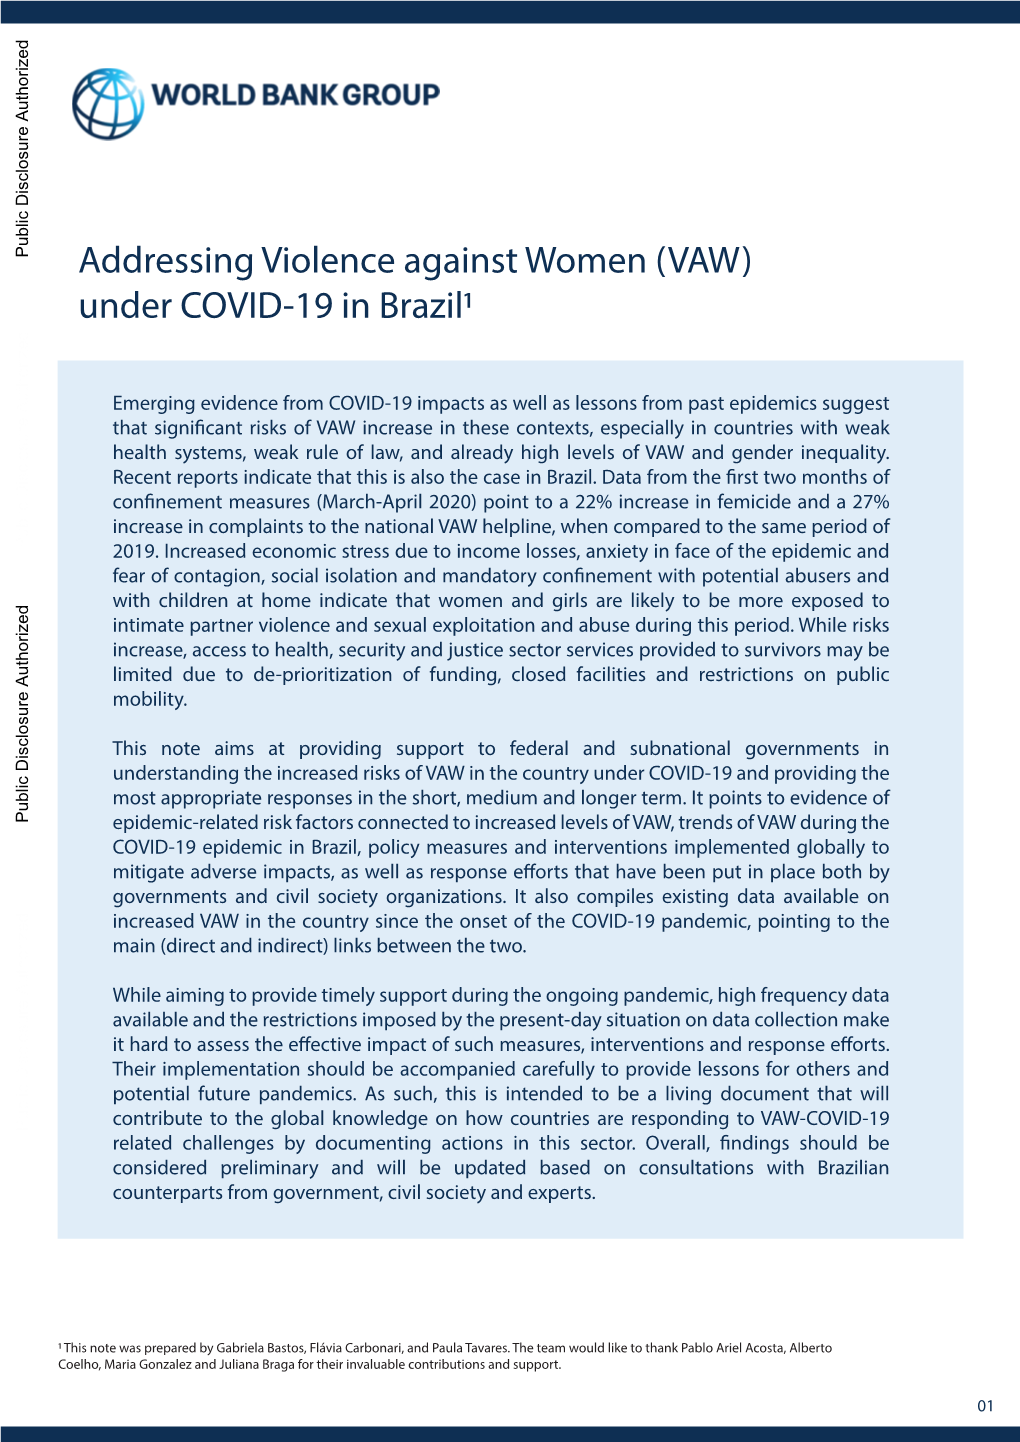 Addressing Violence Against Women (VAW) Under COVID-19 in Brazil